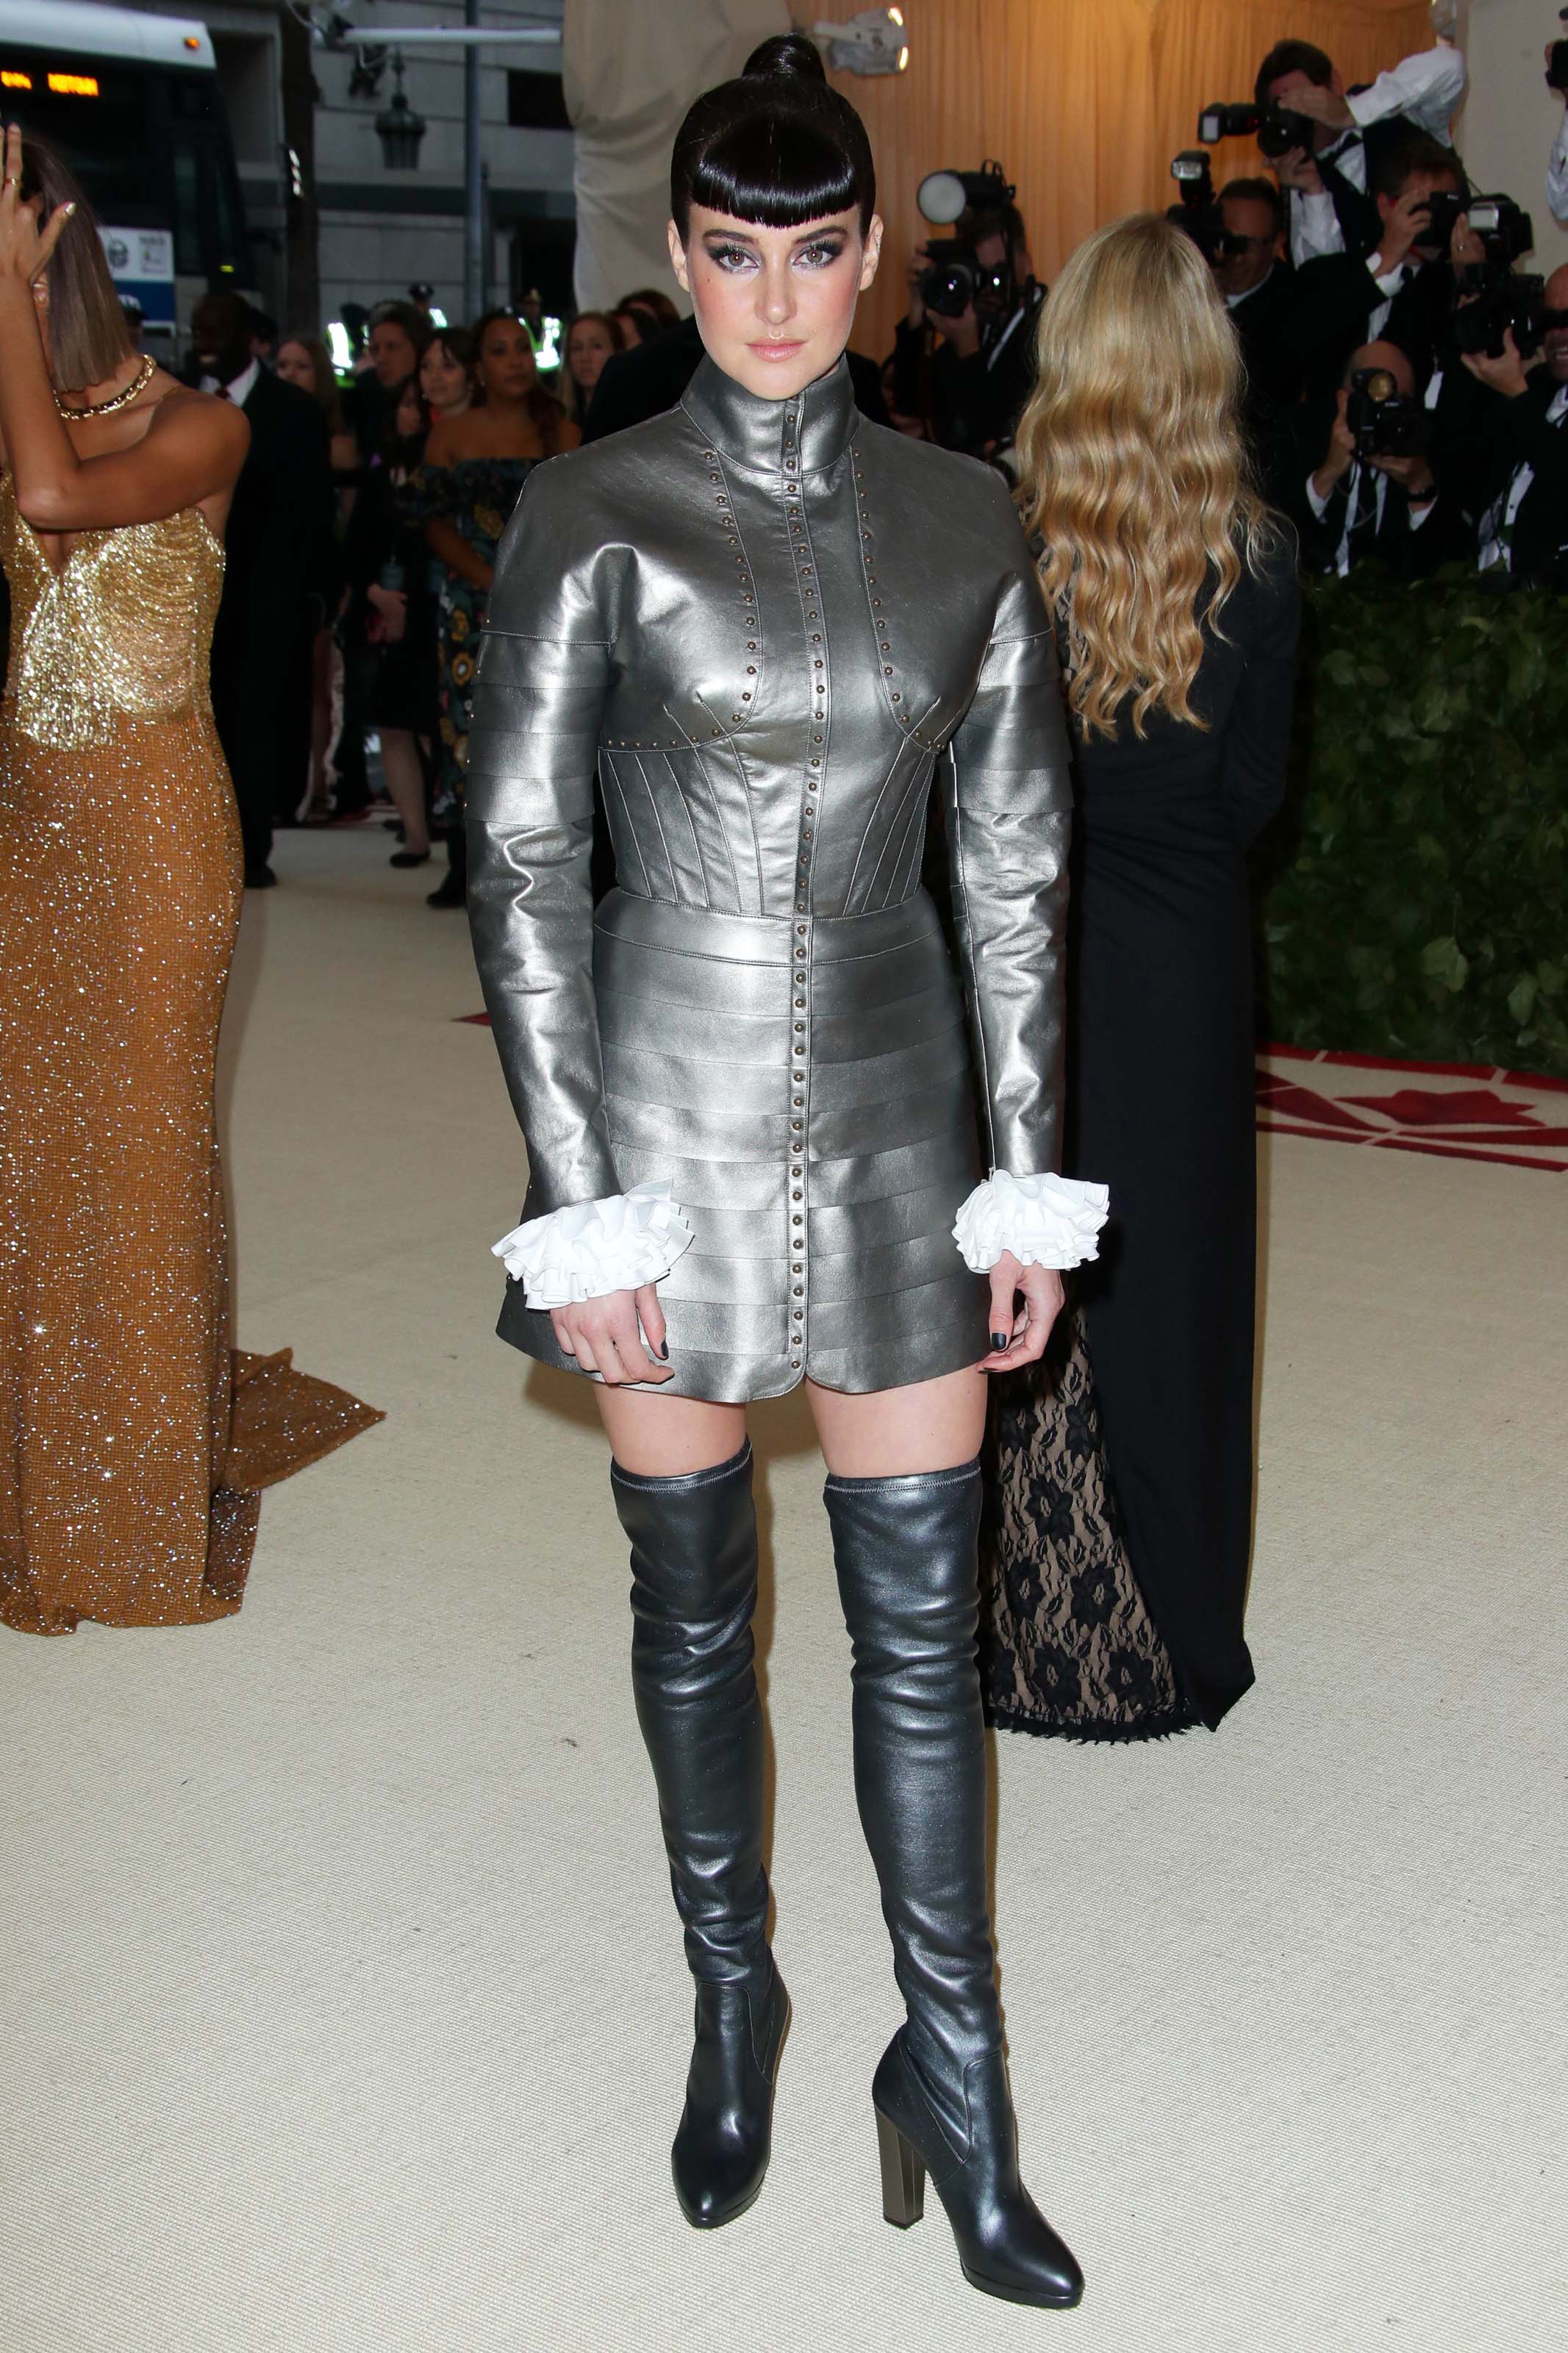 Shailene Woodley attends MET Costume Institute Gala